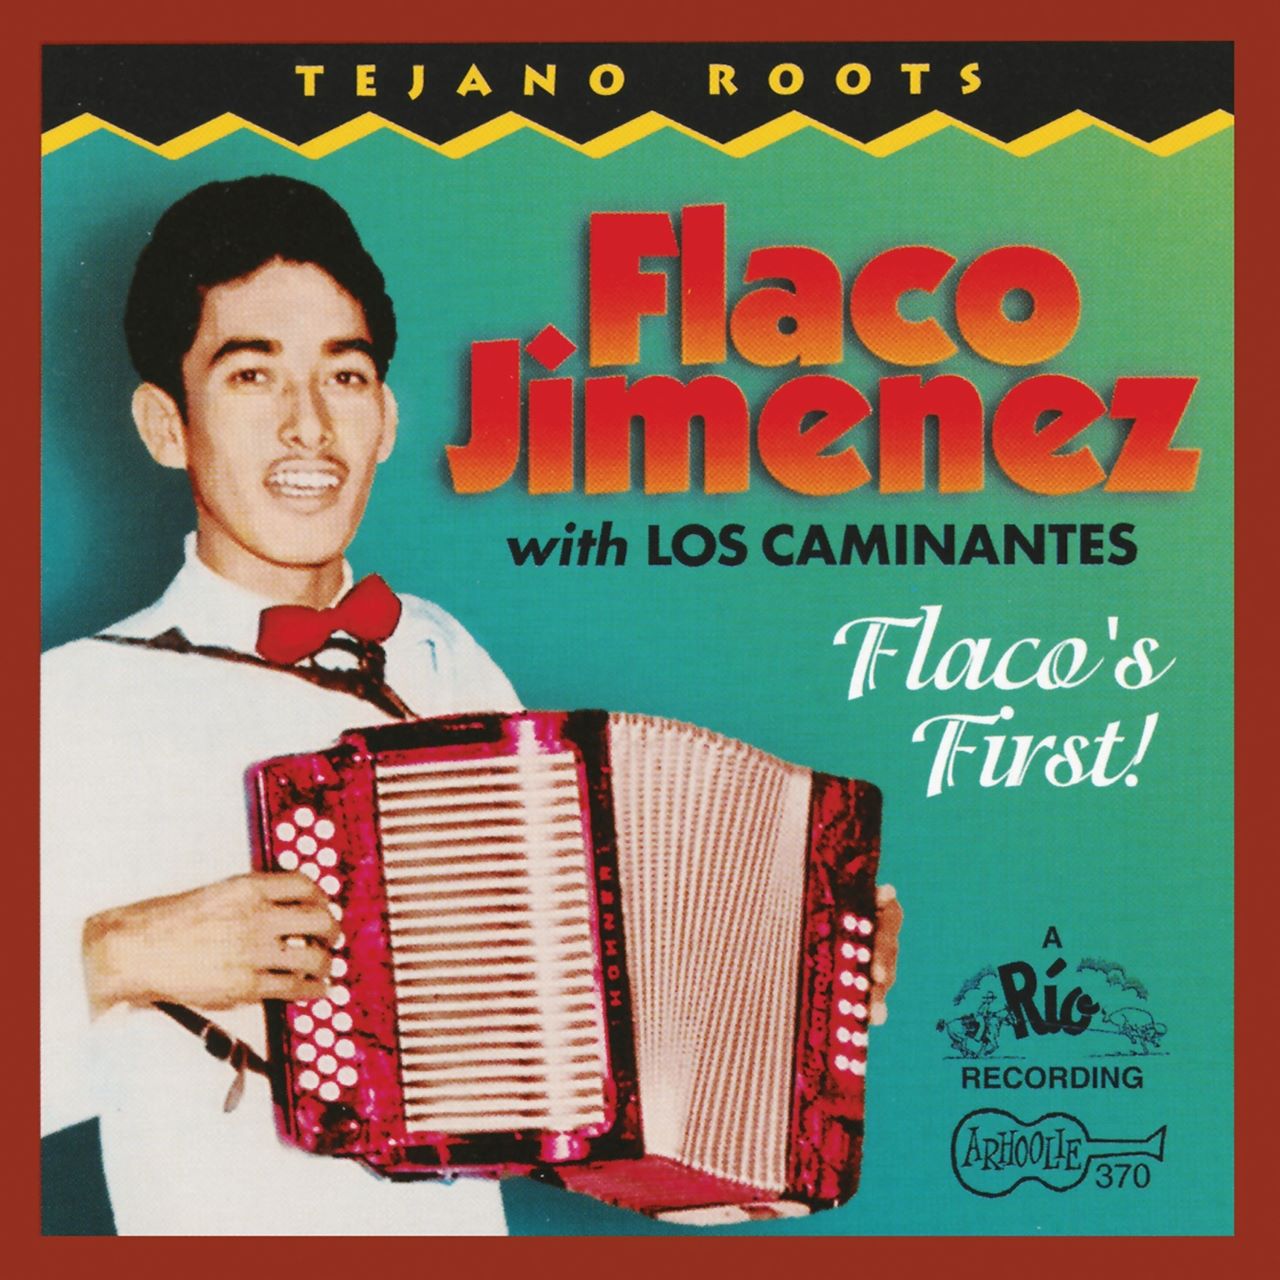 Flaco Jimenez - Flaco's First! cover album